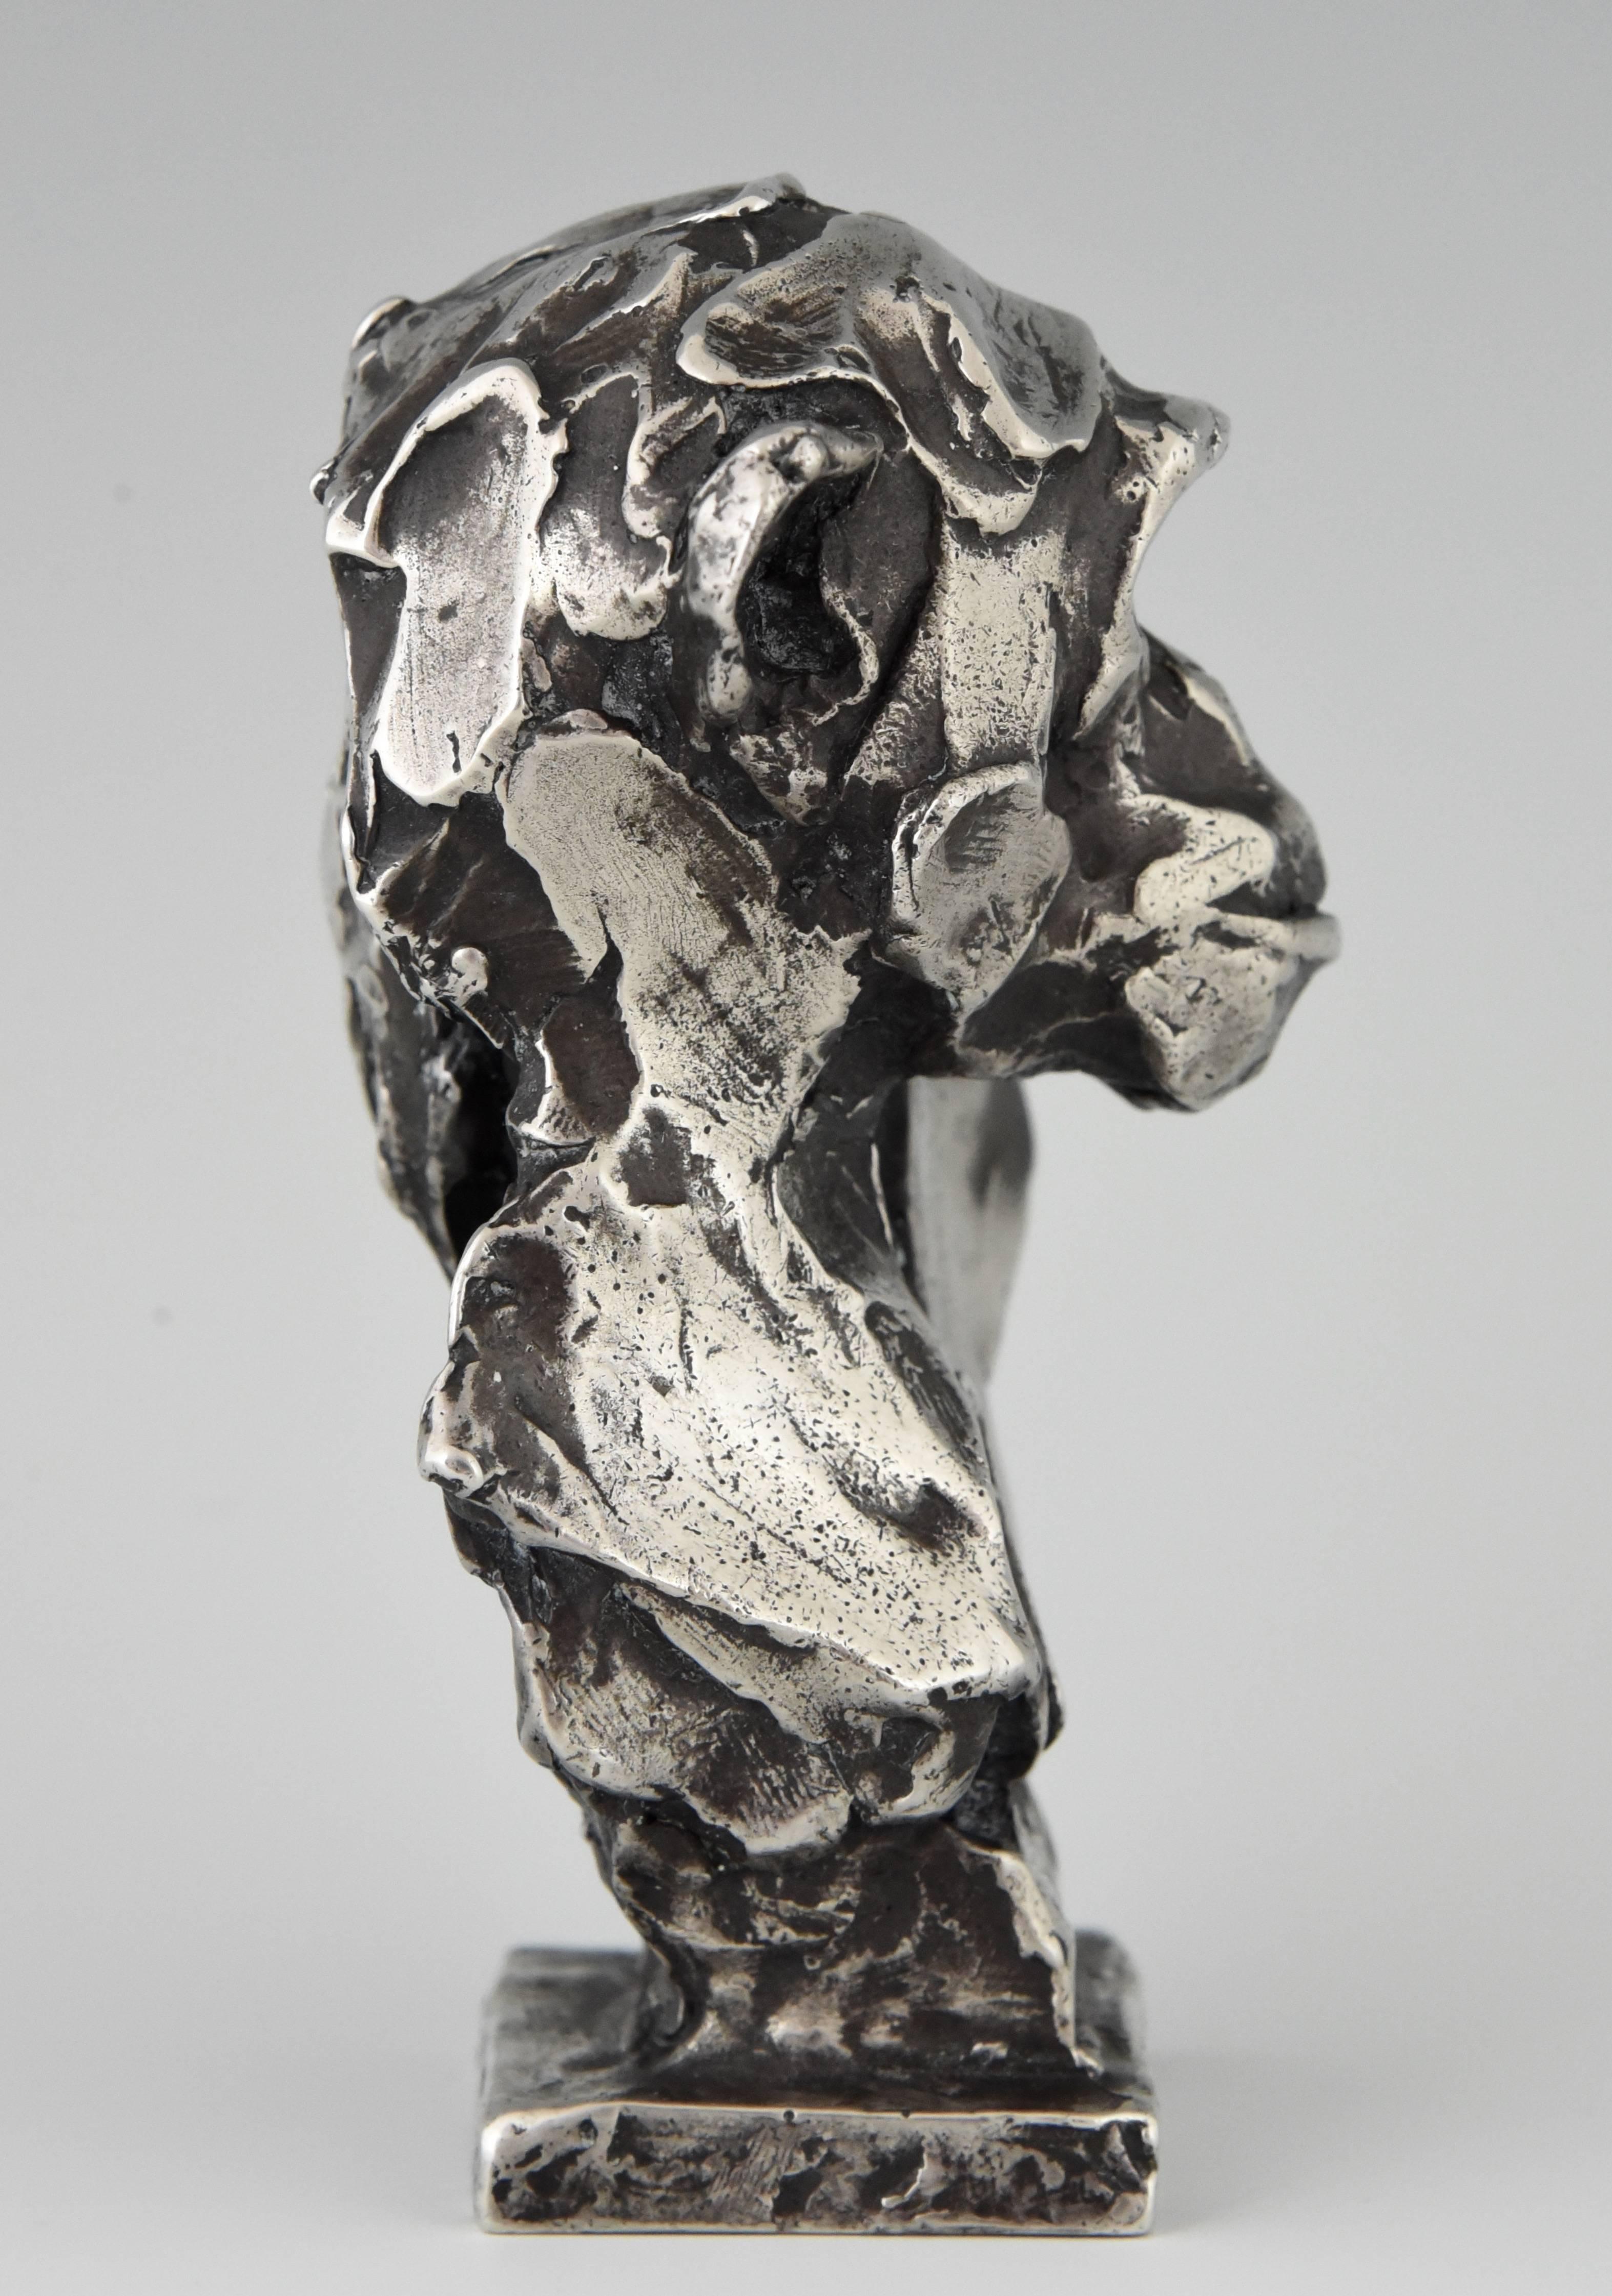 Belgian Sterling Silver Sculpture of a Chimpanzee Monkey by Erwin Peeters